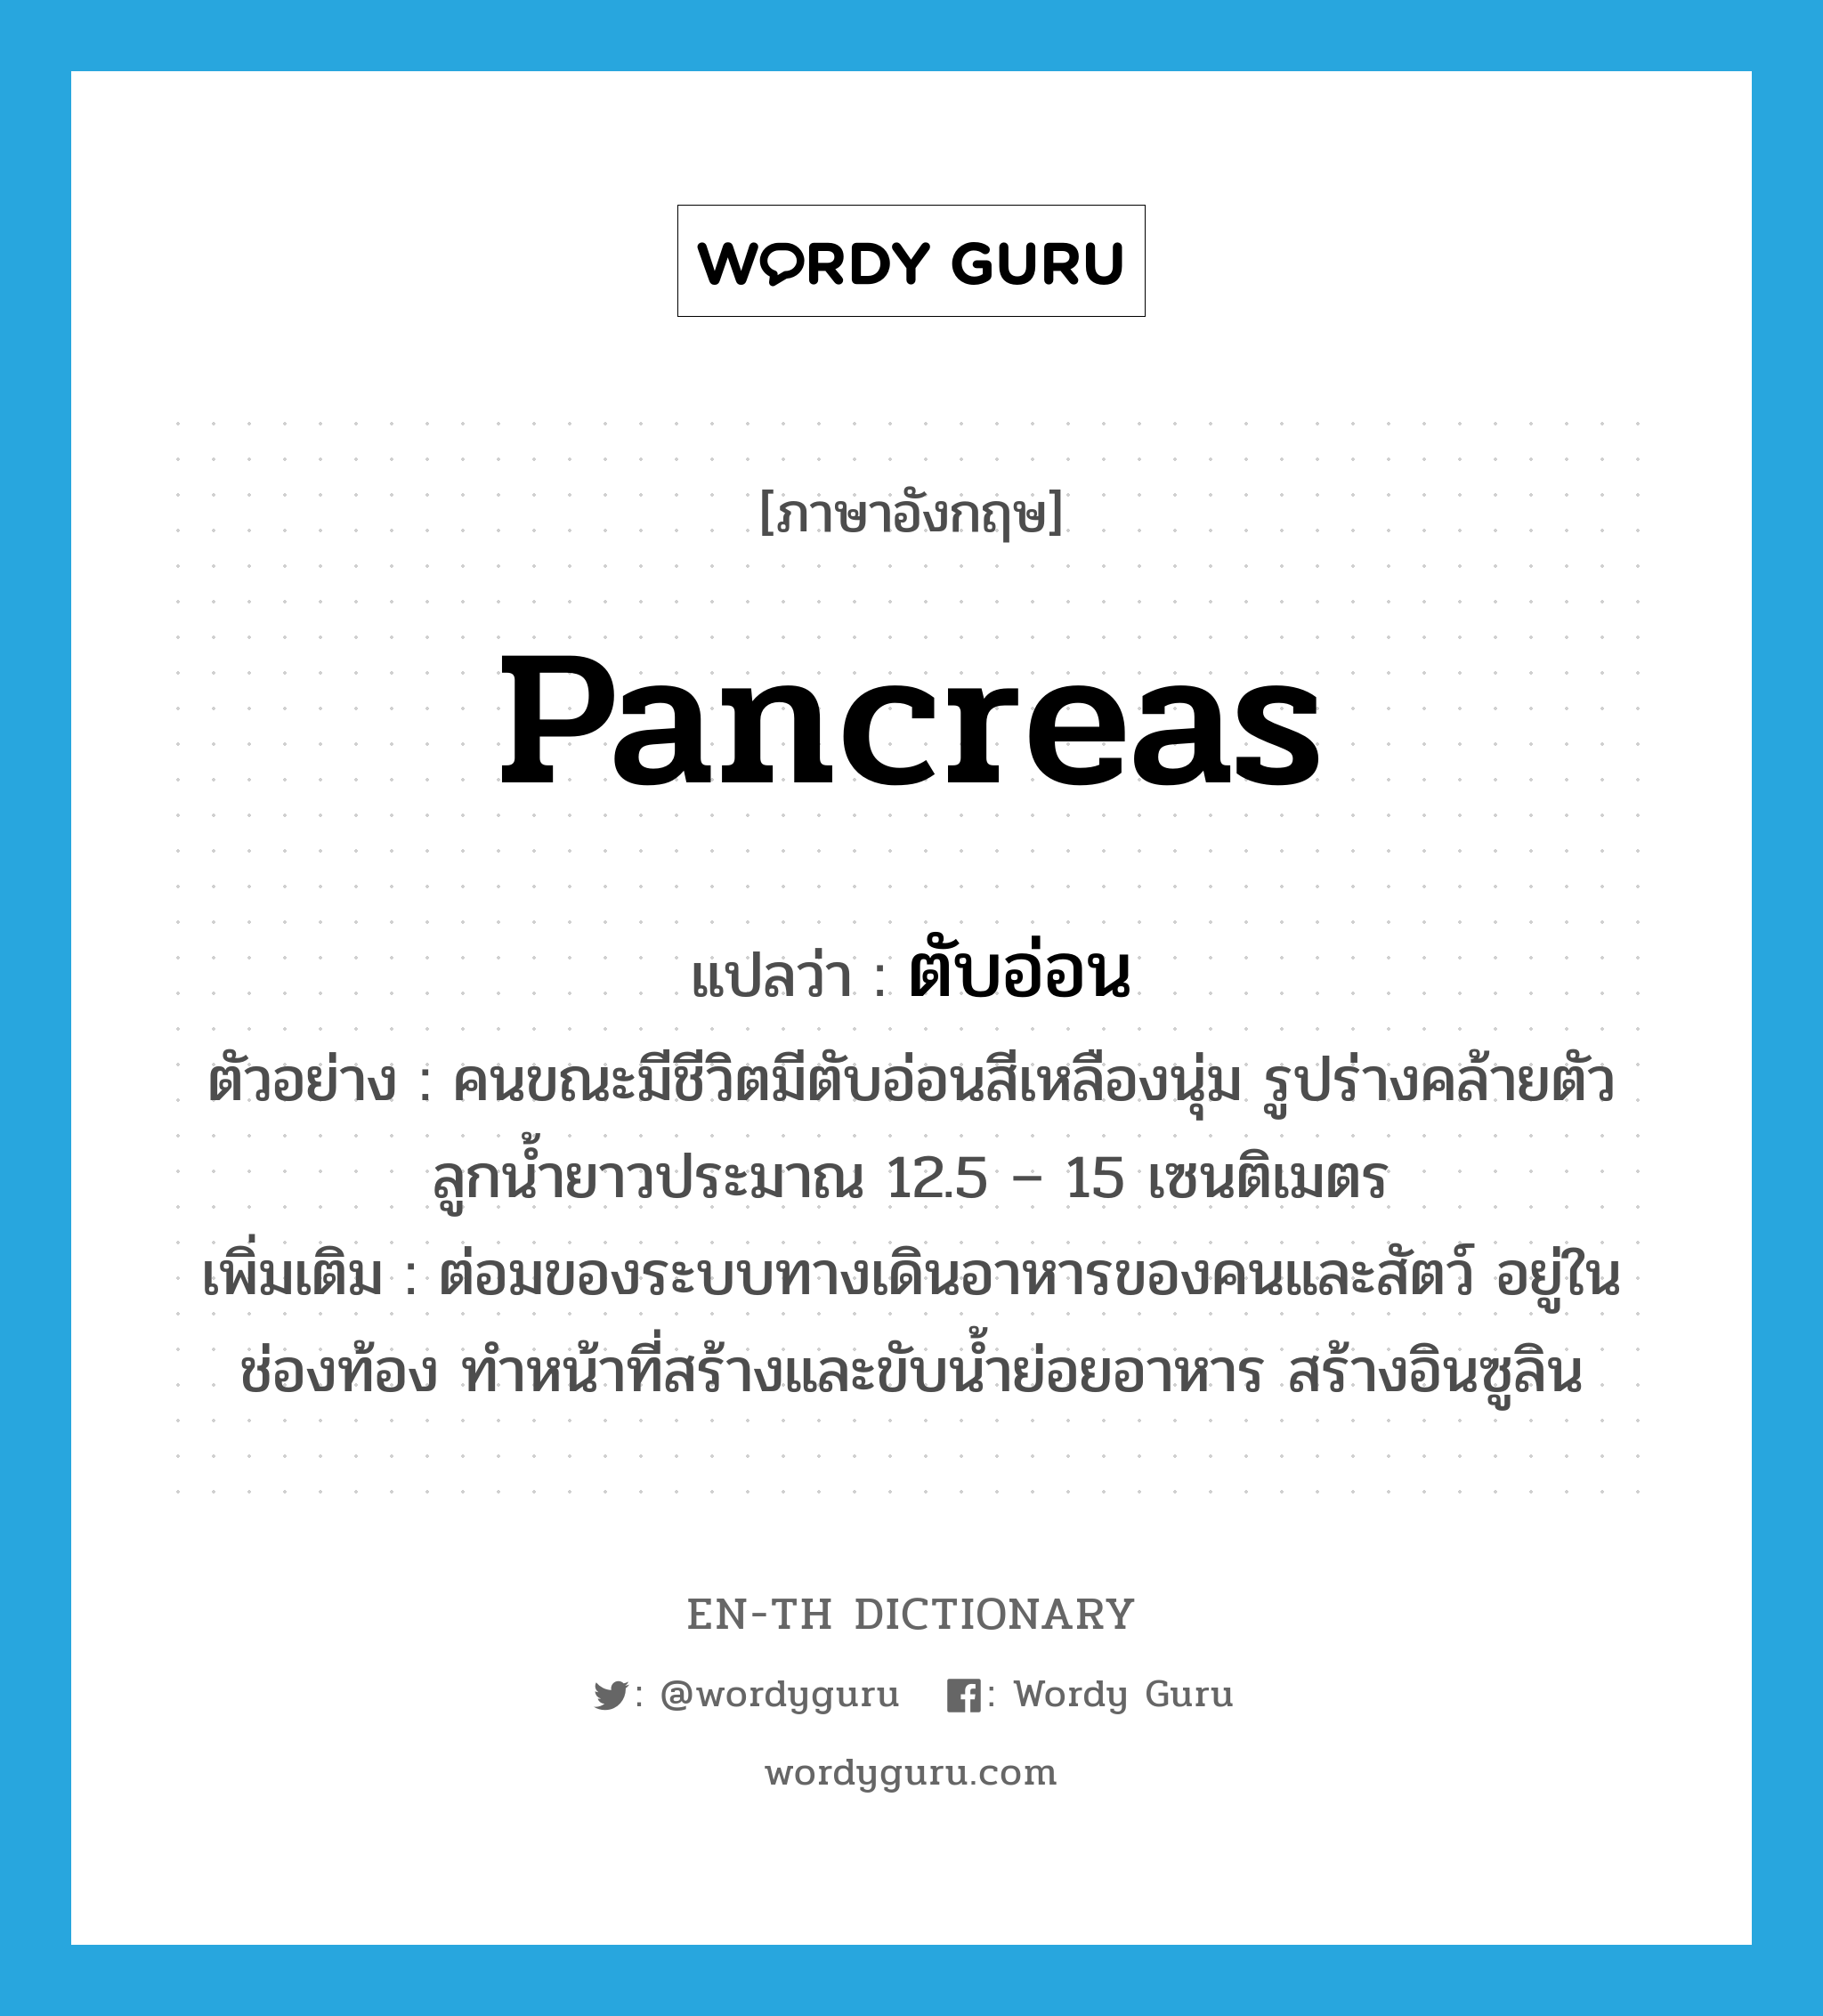 pancreas แปลว่า?, คำศัพท์ภาษาอังกฤษ pancreas แปลว่า ตับอ่อน ประเภท N ตัวอย่าง คนขณะมีชีวิตมีตับอ่อนสีเหลืองนุ่ม รูปร่างคล้ายตัวลูกน้ำยาวประมาณ 12.5 – 15 เซนติเมตร เพิ่มเติม ต่อมของระบบทางเดินอาหารของคนและสัตว์ อยู่ในช่องท้อง ทำหน้าที่สร้างและขับน้ำย่อยอาหาร สร้างอินซูลิน หมวด N